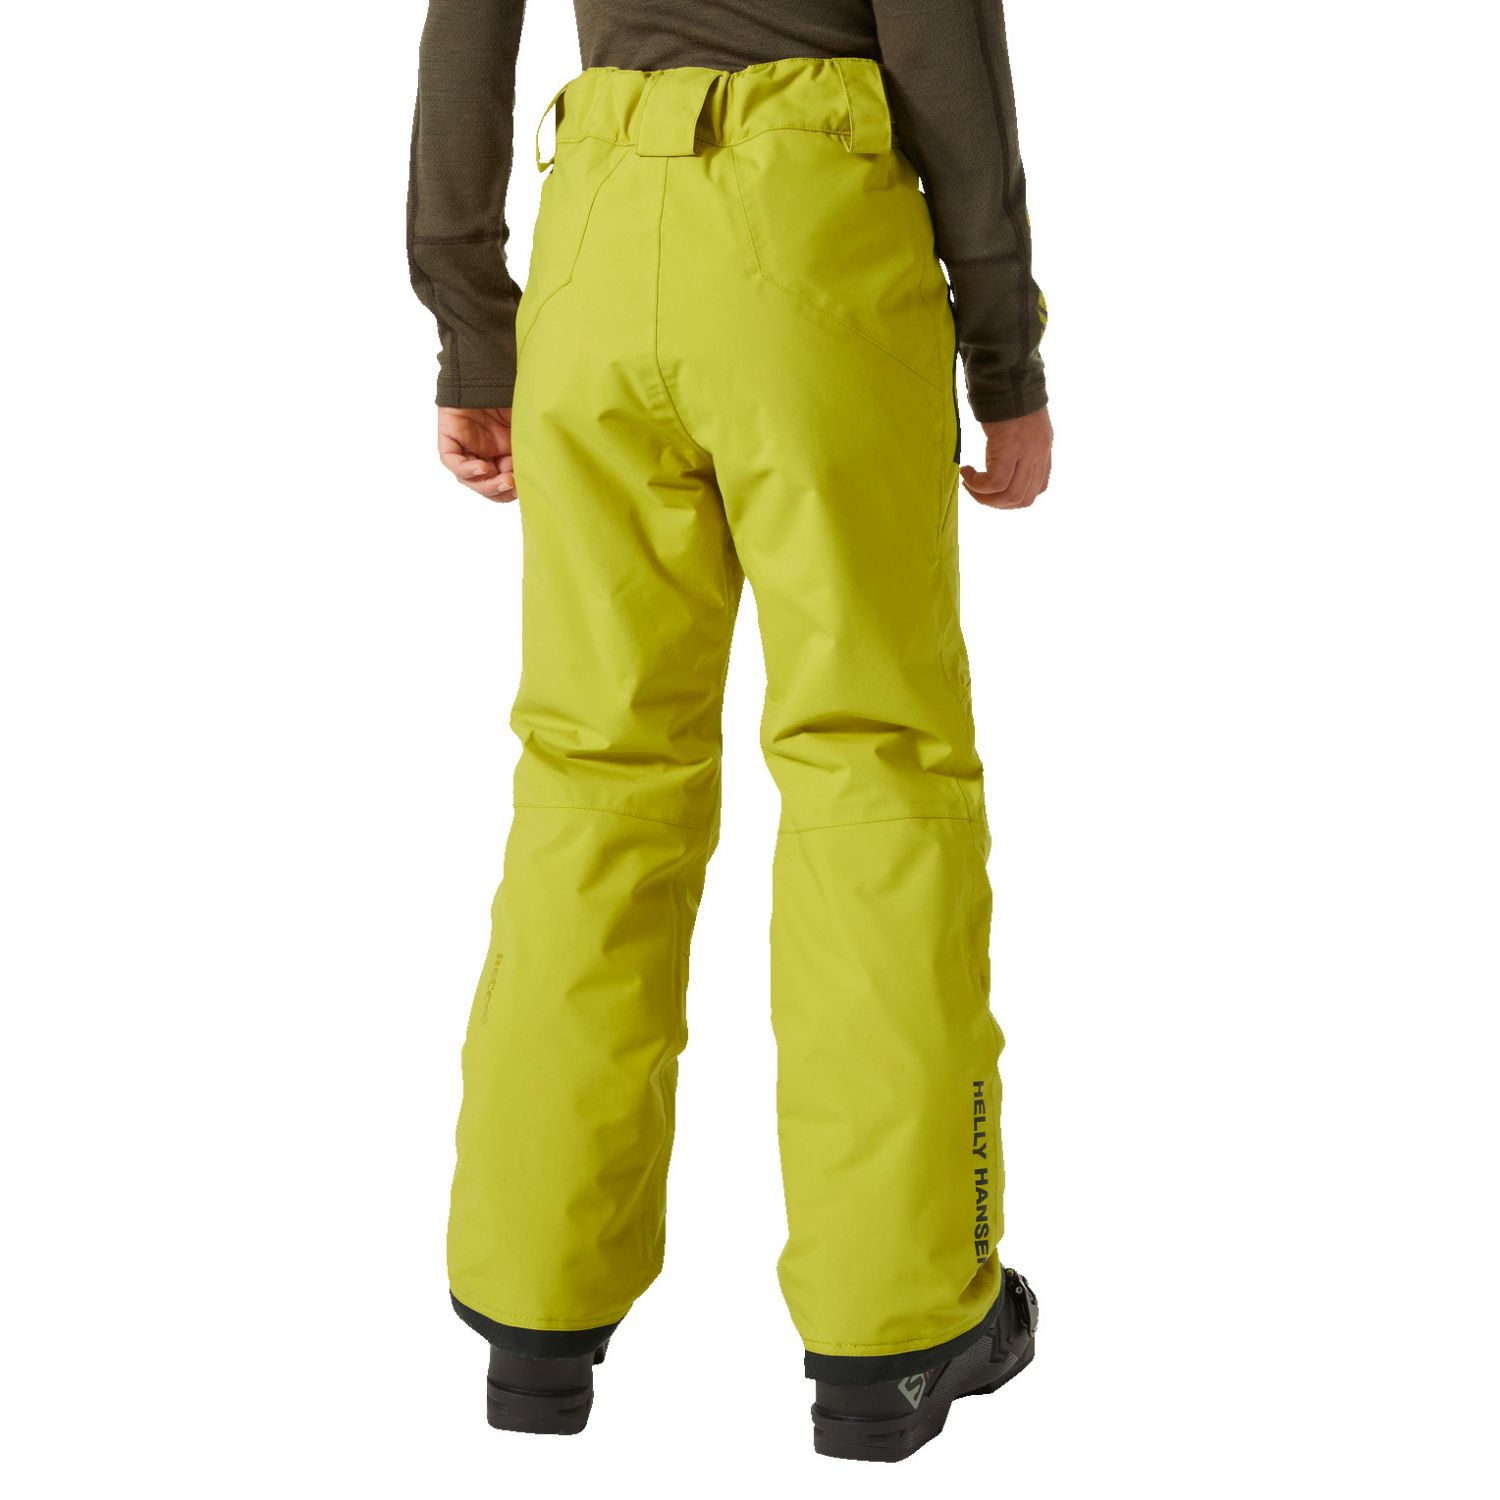 Helly Hansen Legendary, pantalon de ski, junior, vert jaune